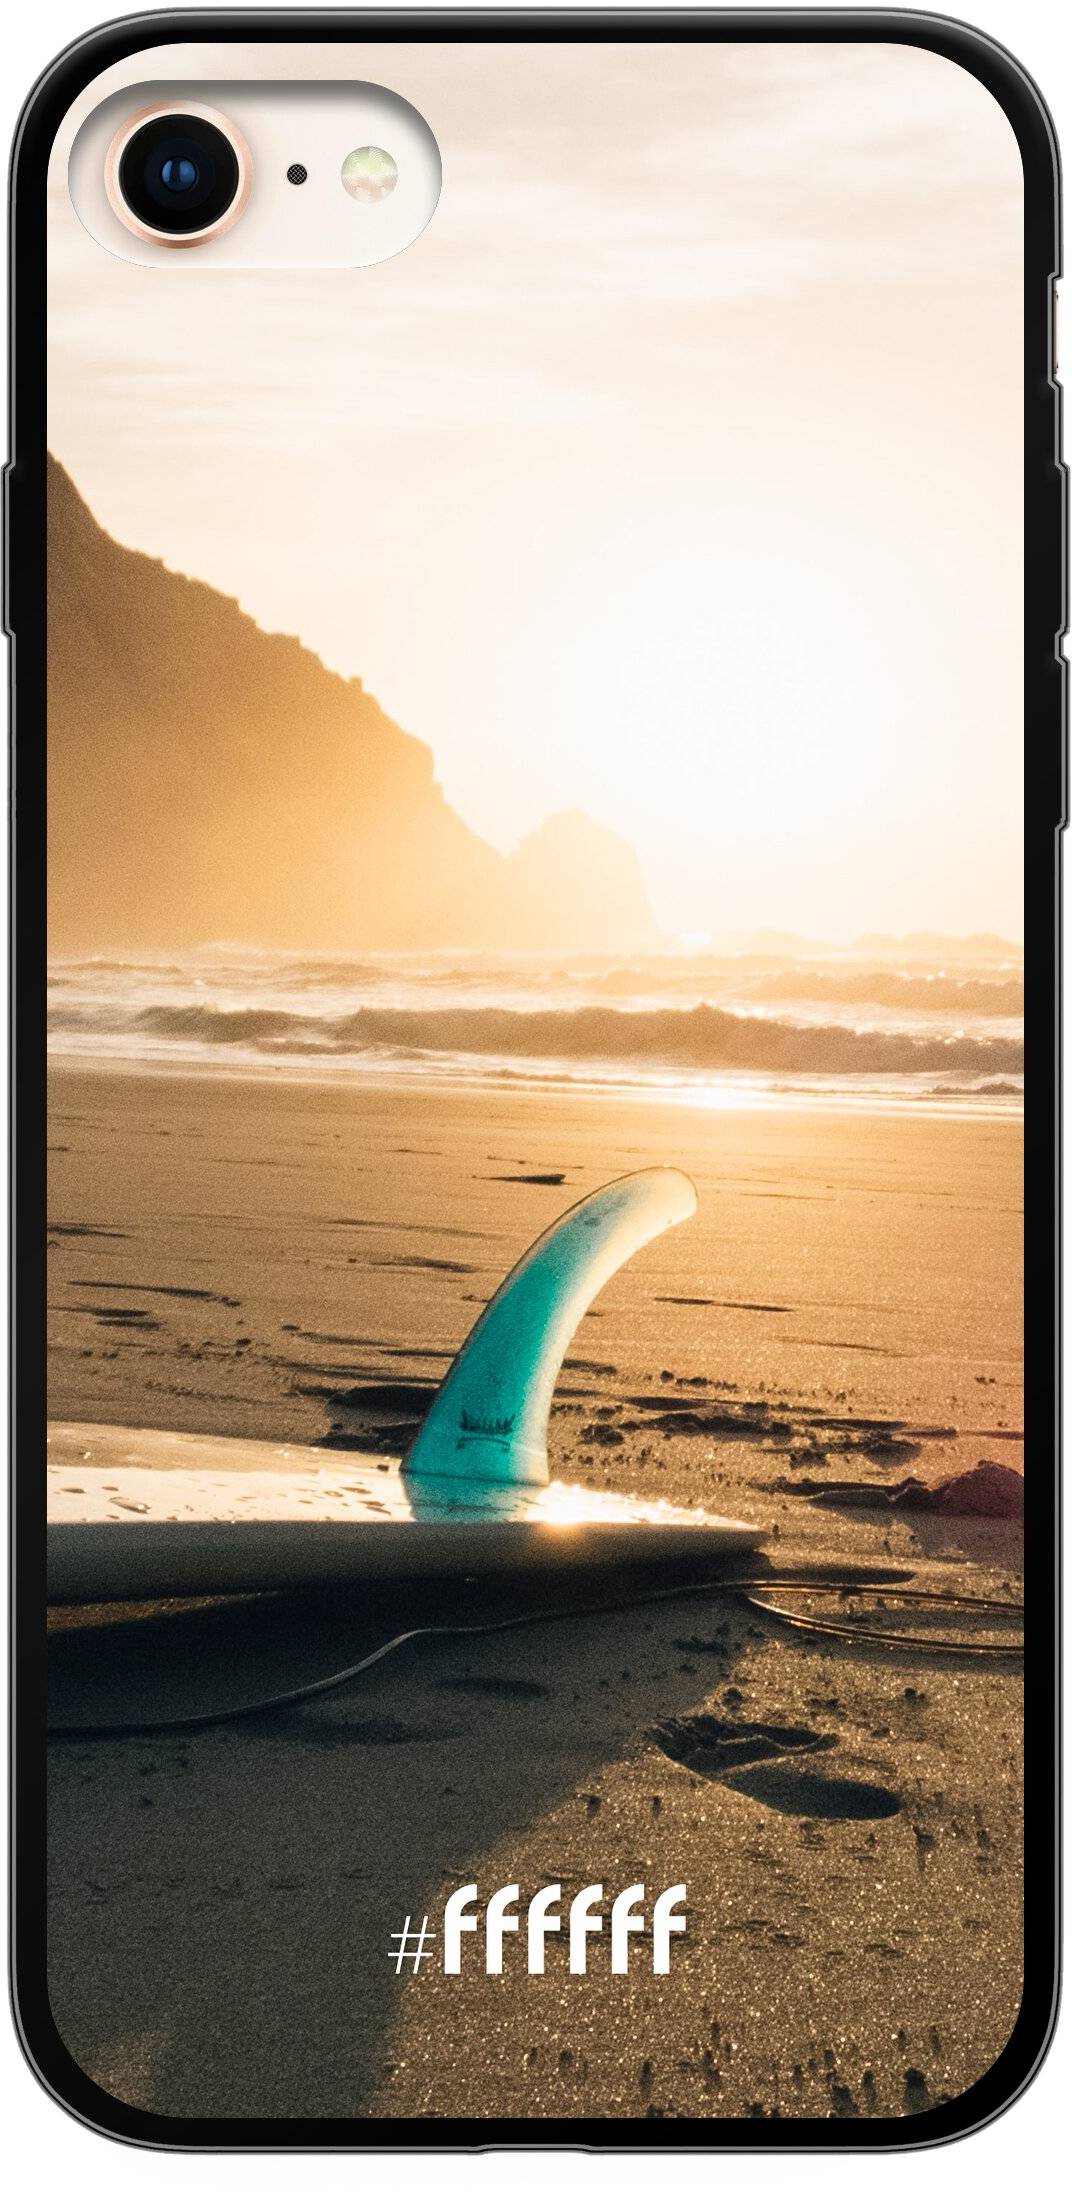 Sunset Surf iPhone 7